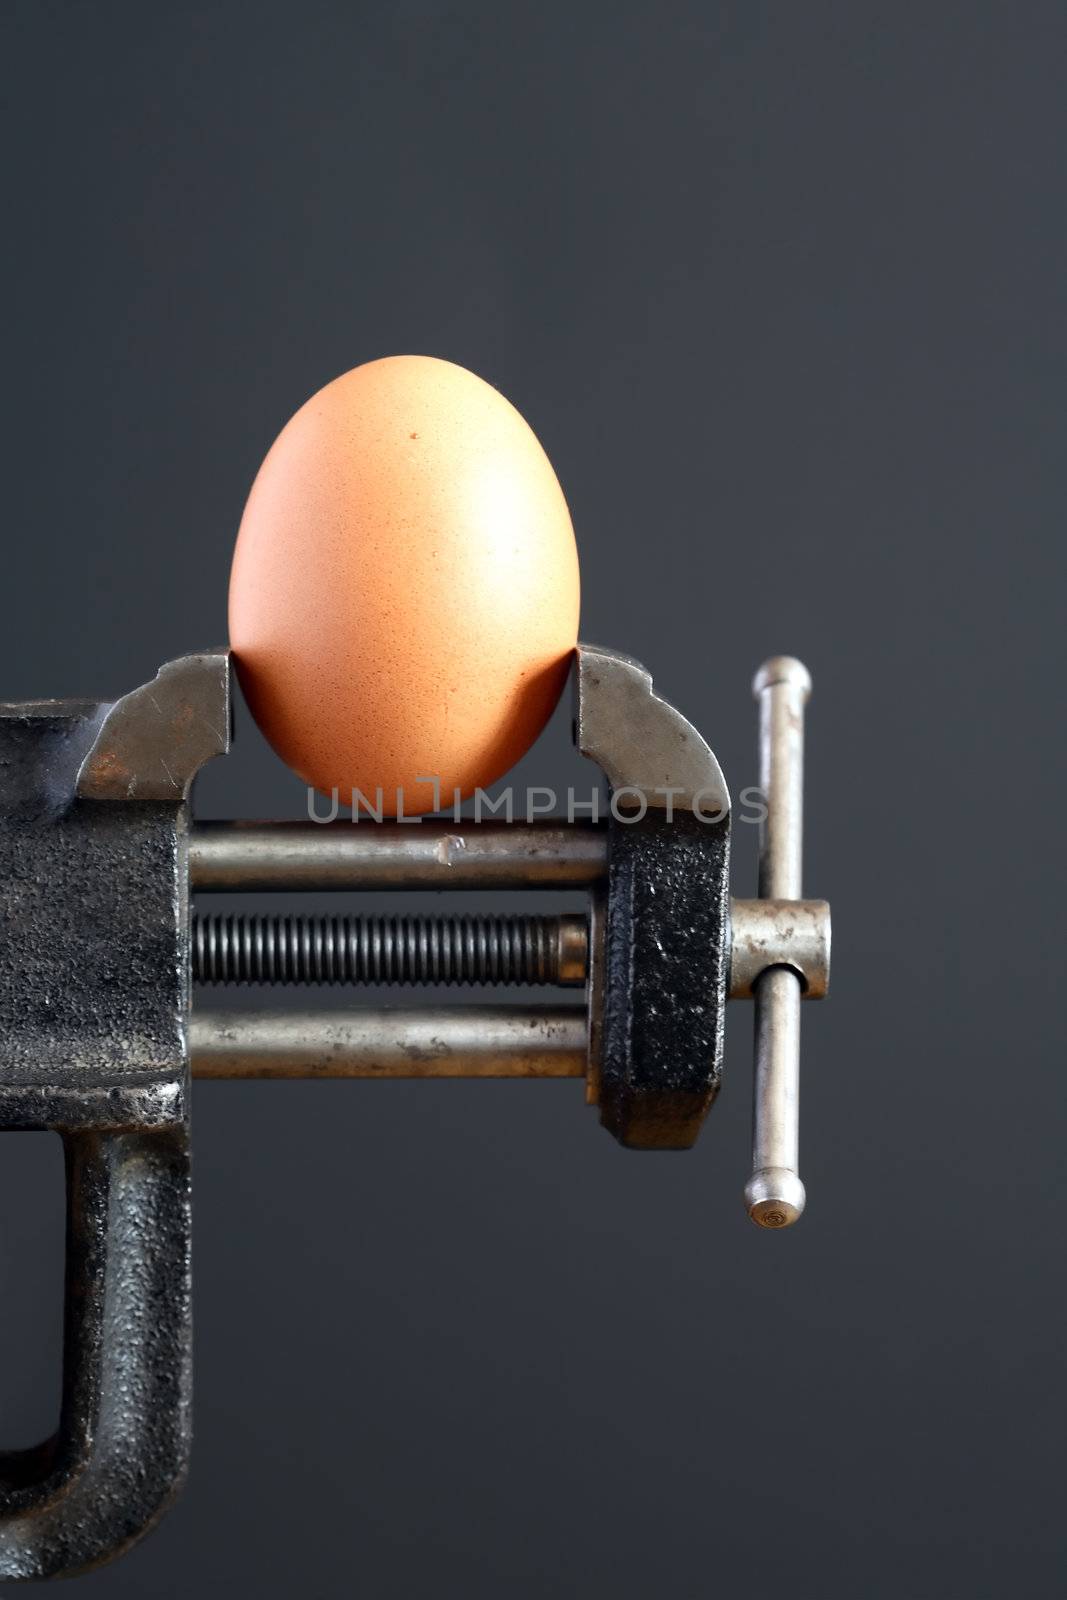 Pressure concept. Hen's egg pressured in a bench vice on dark background